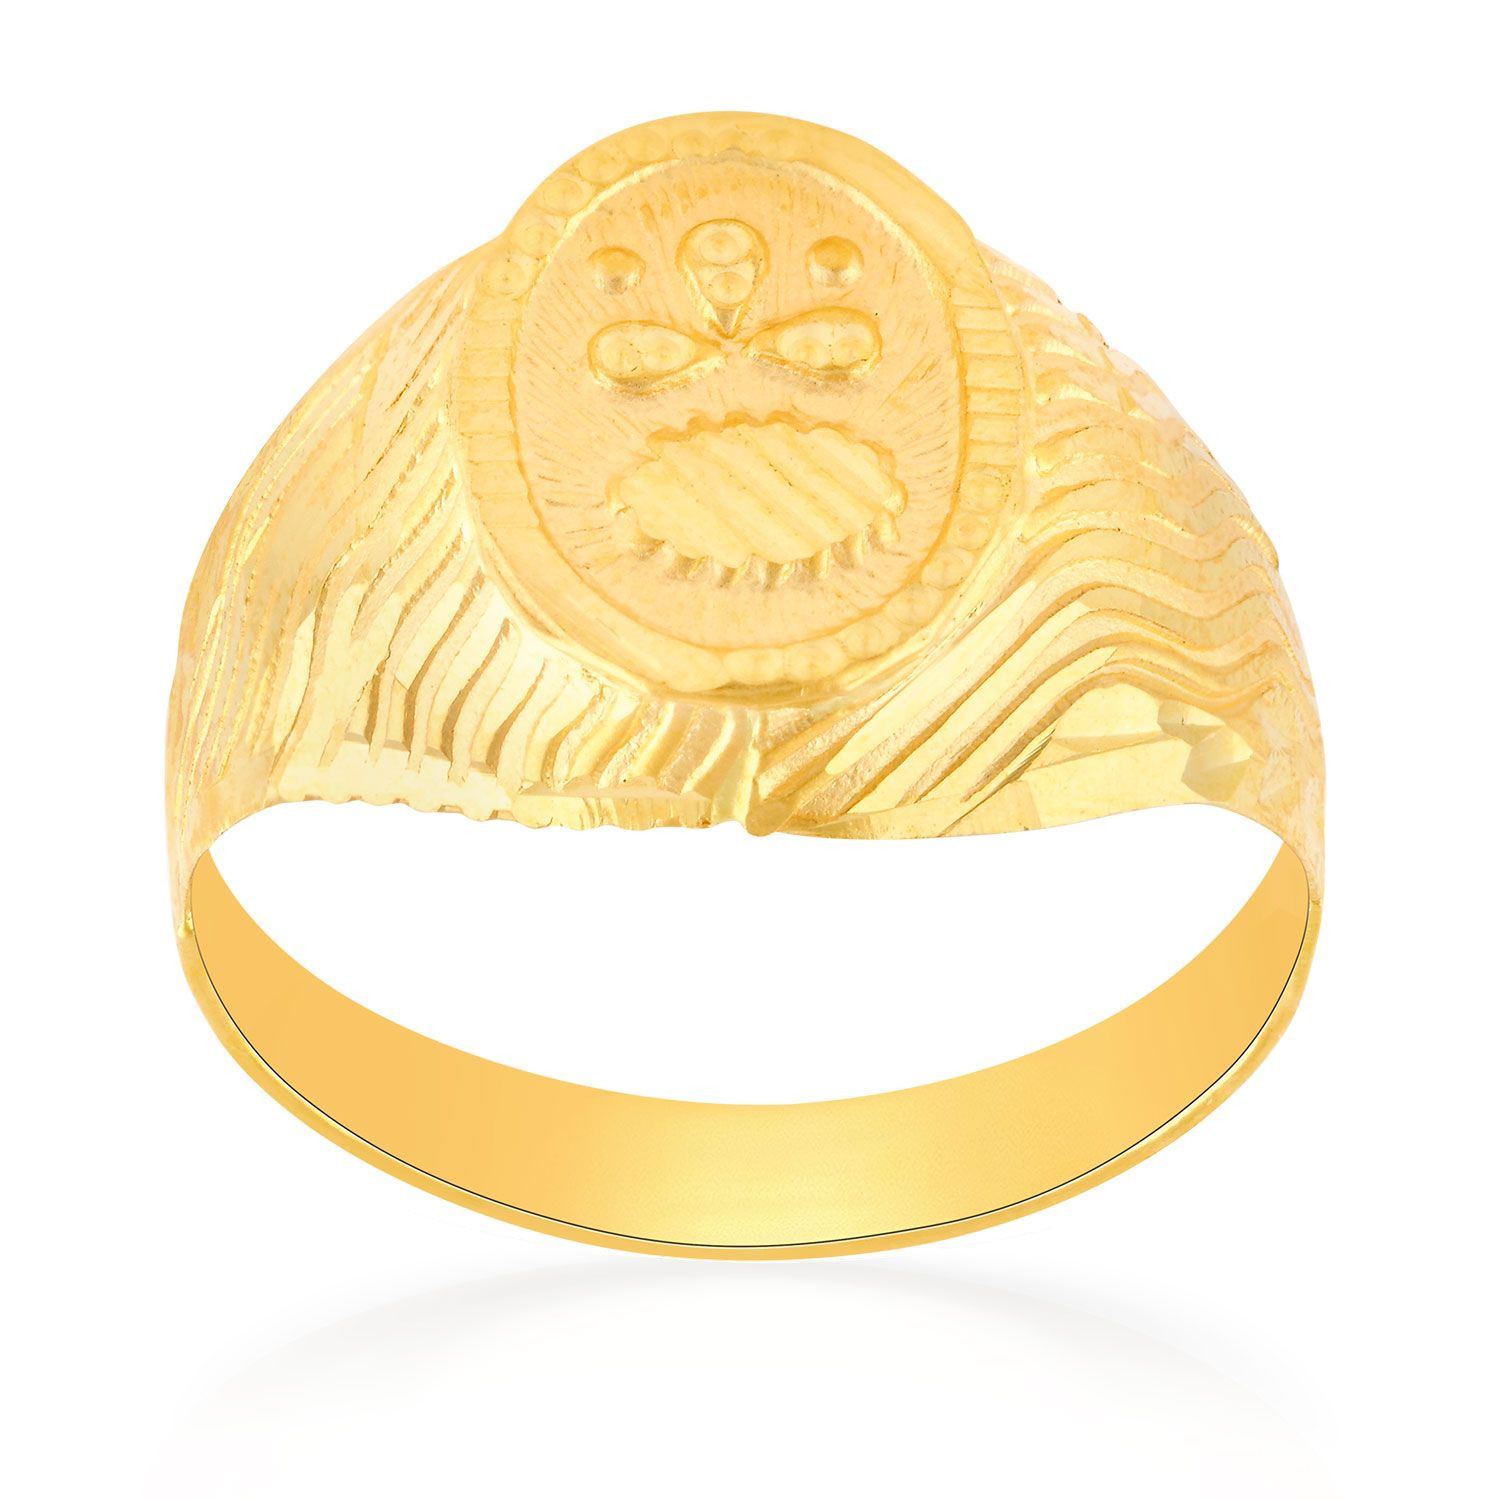 Buy Malabar Gold Ring RG1105526 for Men Online | Malabar Gold & Diamonds